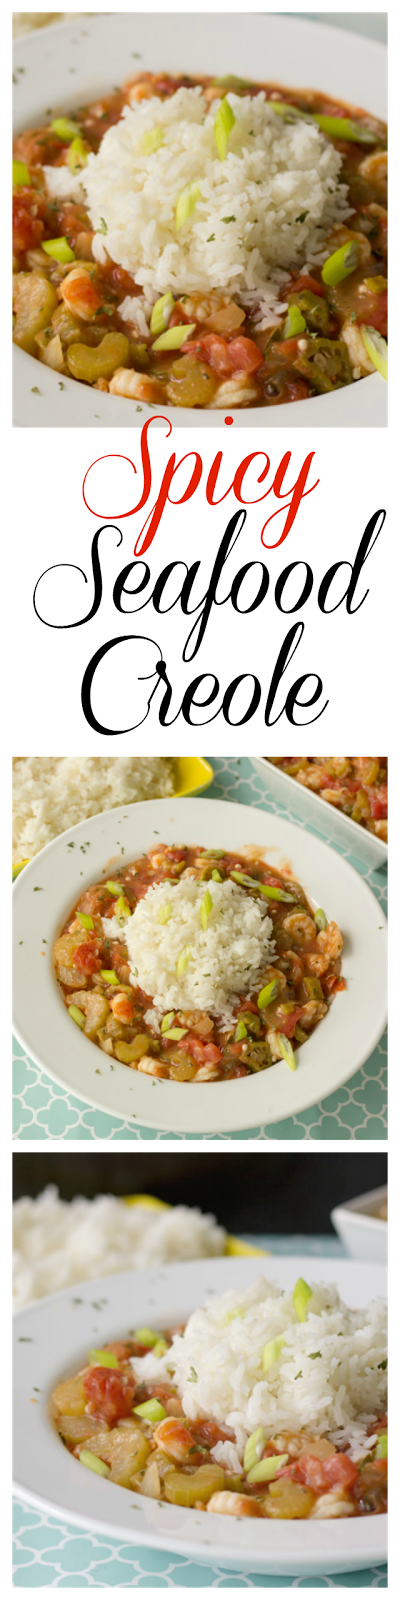 Seafood Creole Recipe